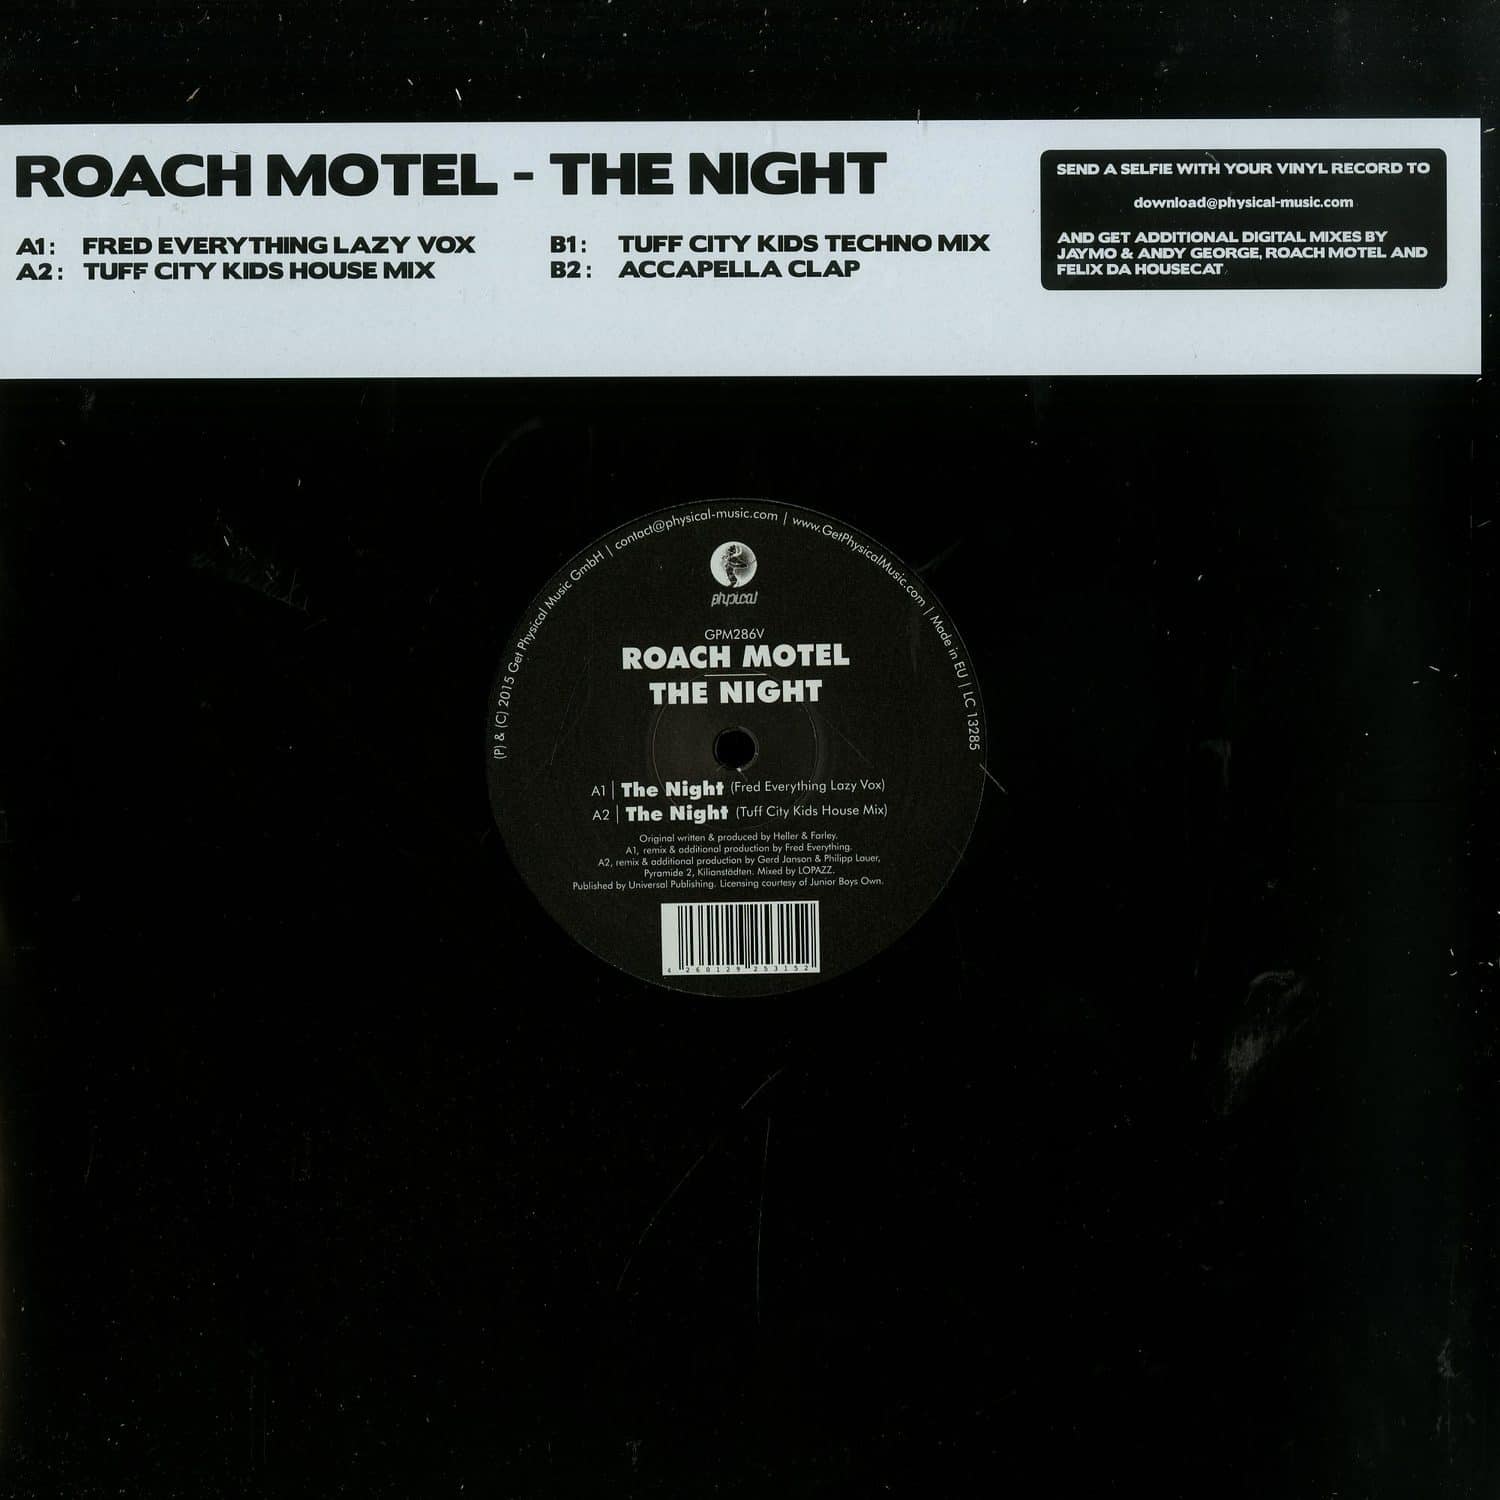 Roach Motel - THE NIGHT 